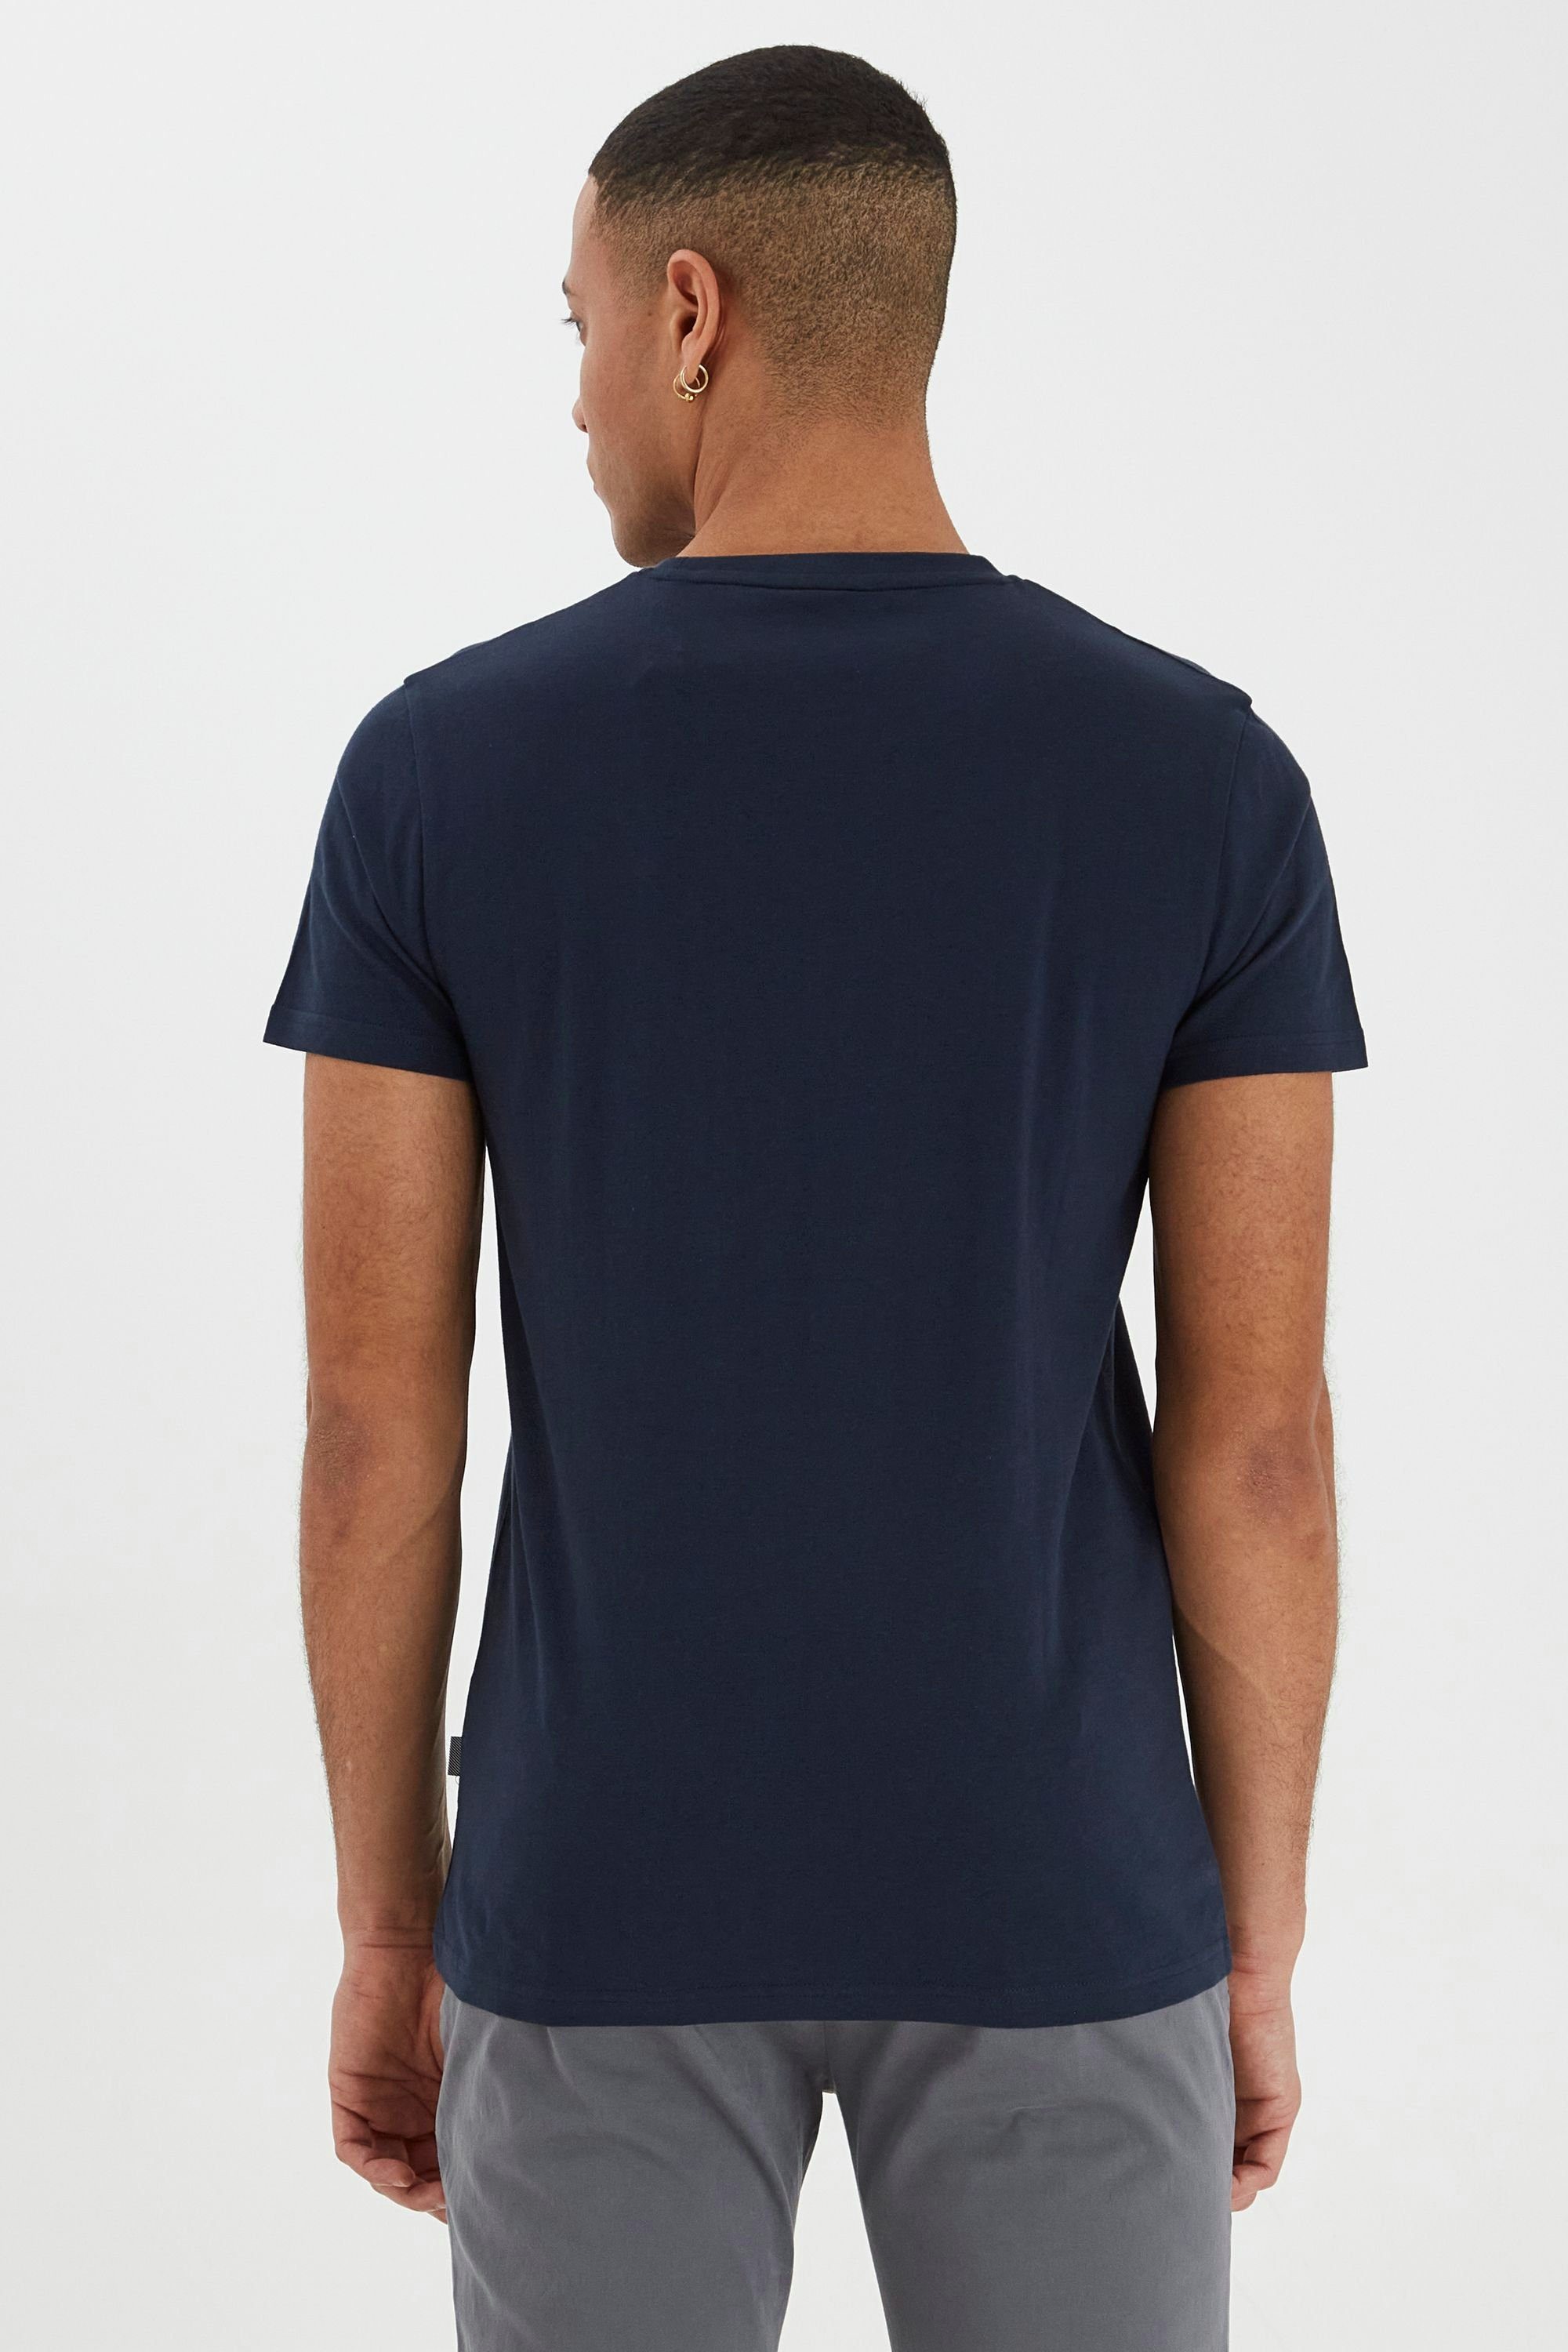 Rundhalsausschnitt (194010) Blue SDConni Insignia T-Shirt !Solid T-Shirt mit